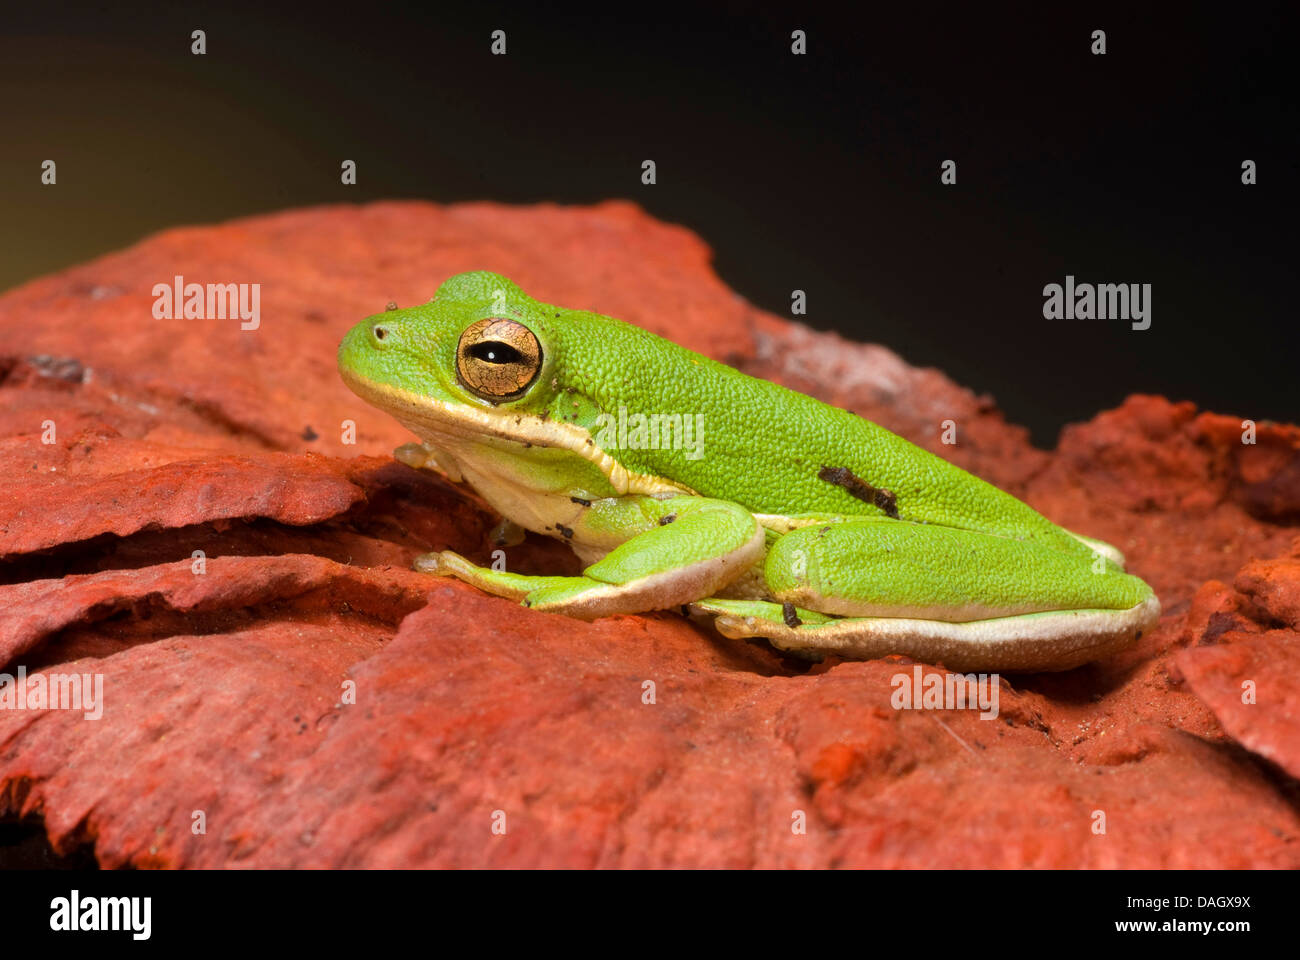 Green Treefrog, North American Green Treefrog (Hyla cinerea), on a stone Stock Photo